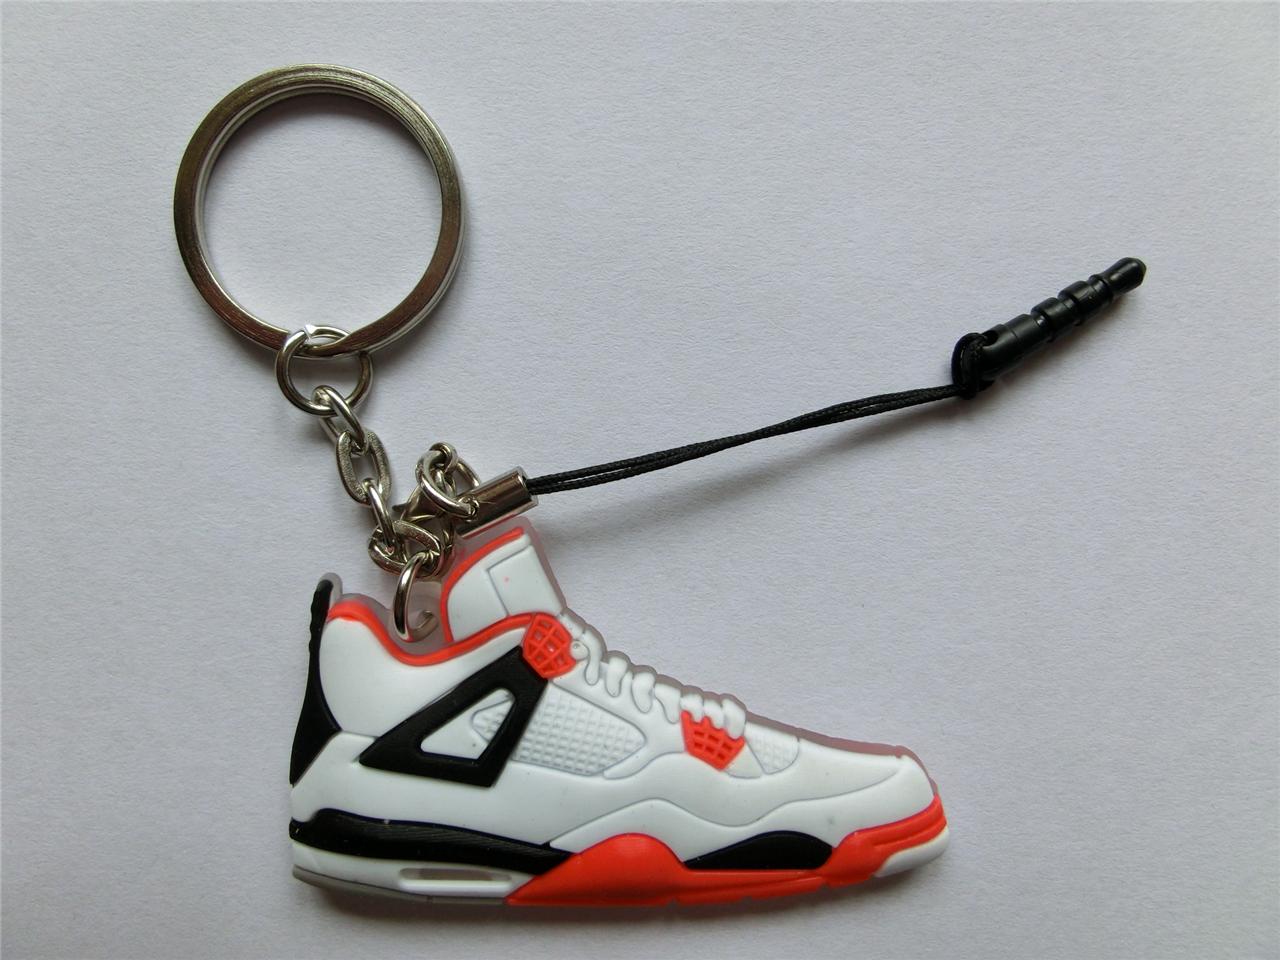 New Air Jordan IV AJ4 Retro Sneaker KeyChain | eBay